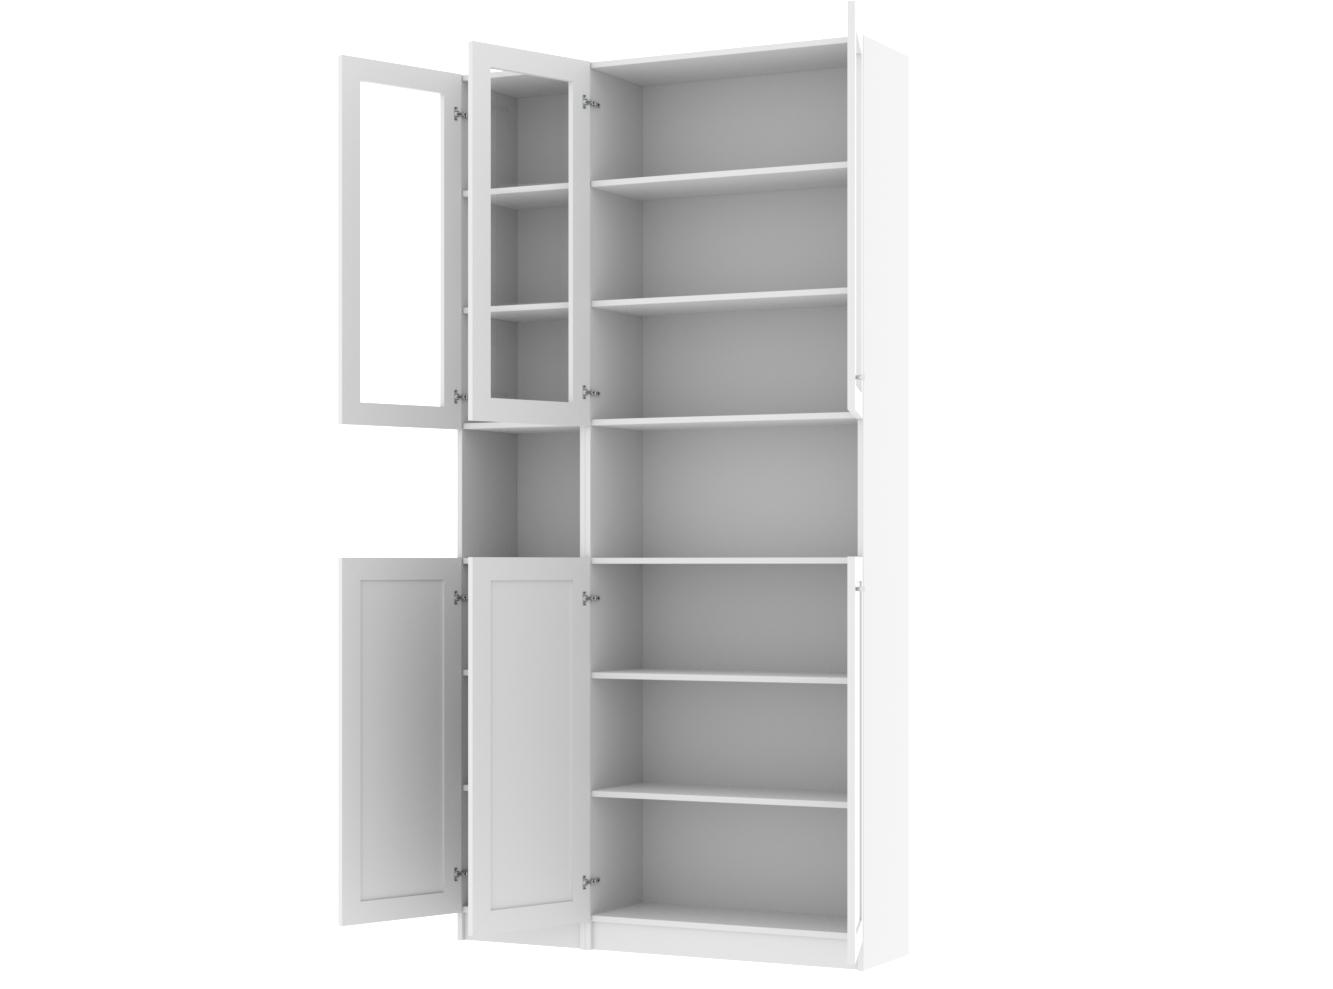 Книжный шкаф Билли 337 white ИКЕА (IKEA) изображение товара